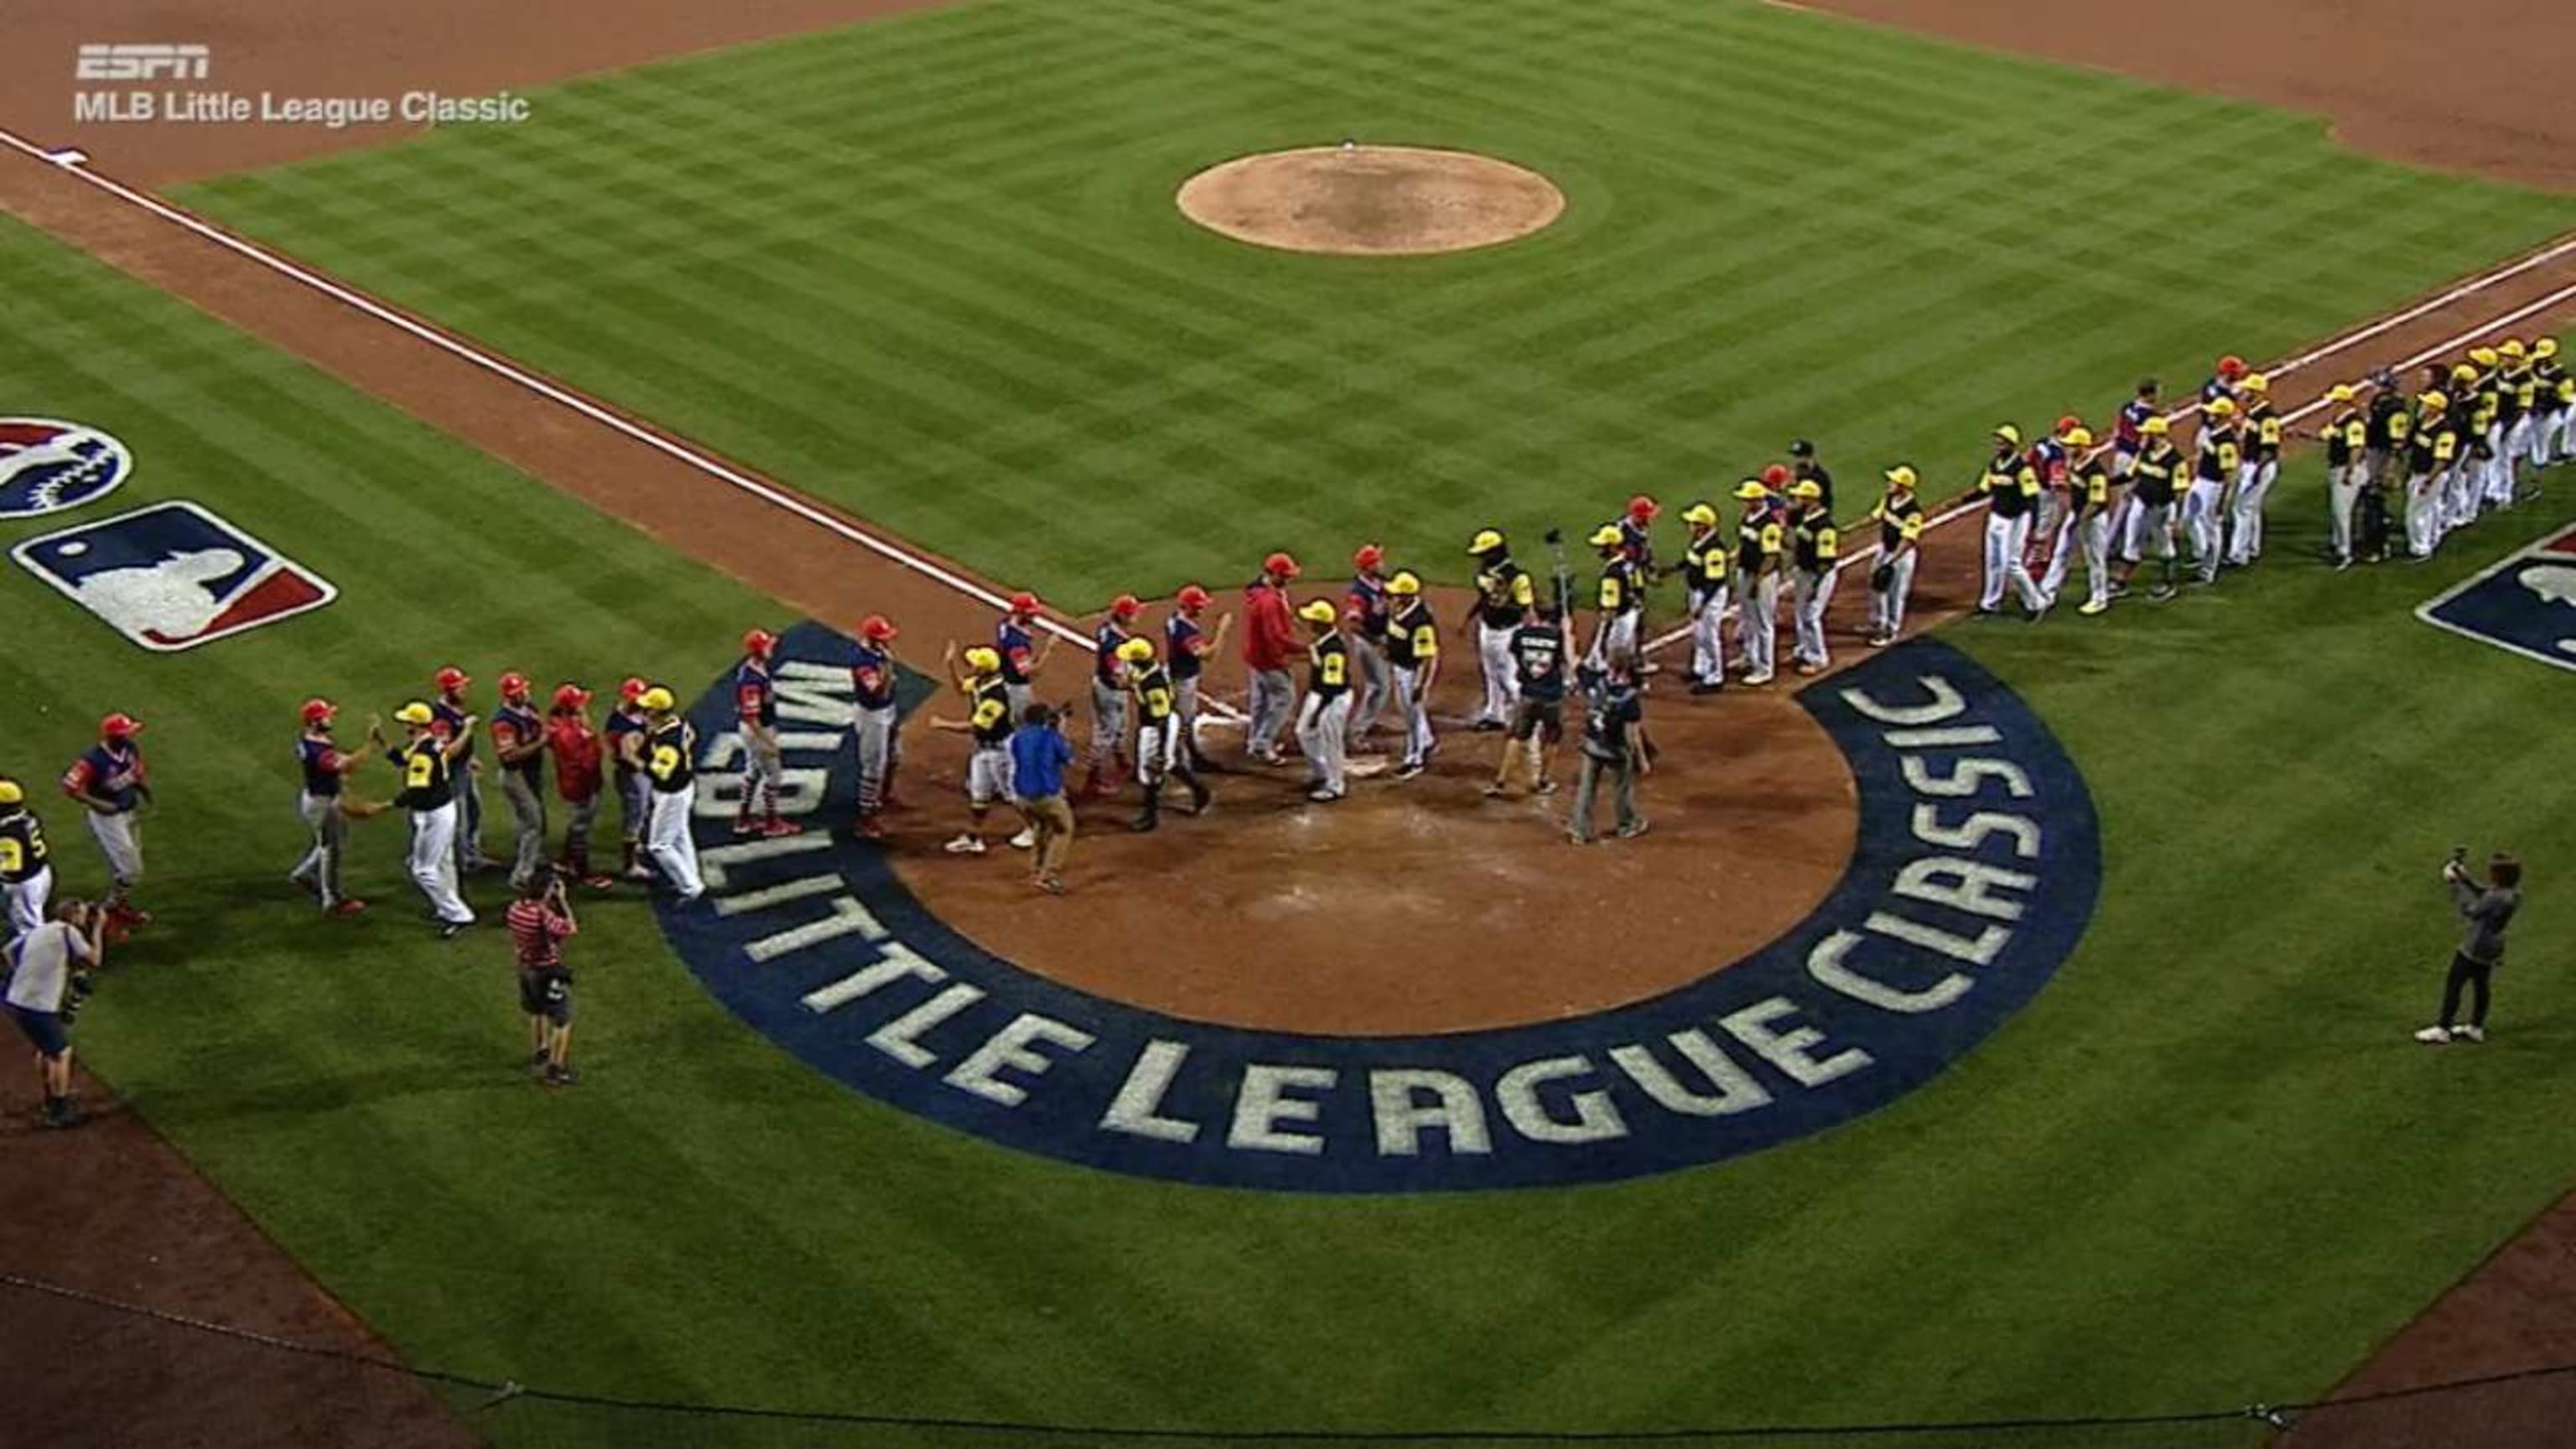 MLB Little League Classic - Wikipedia